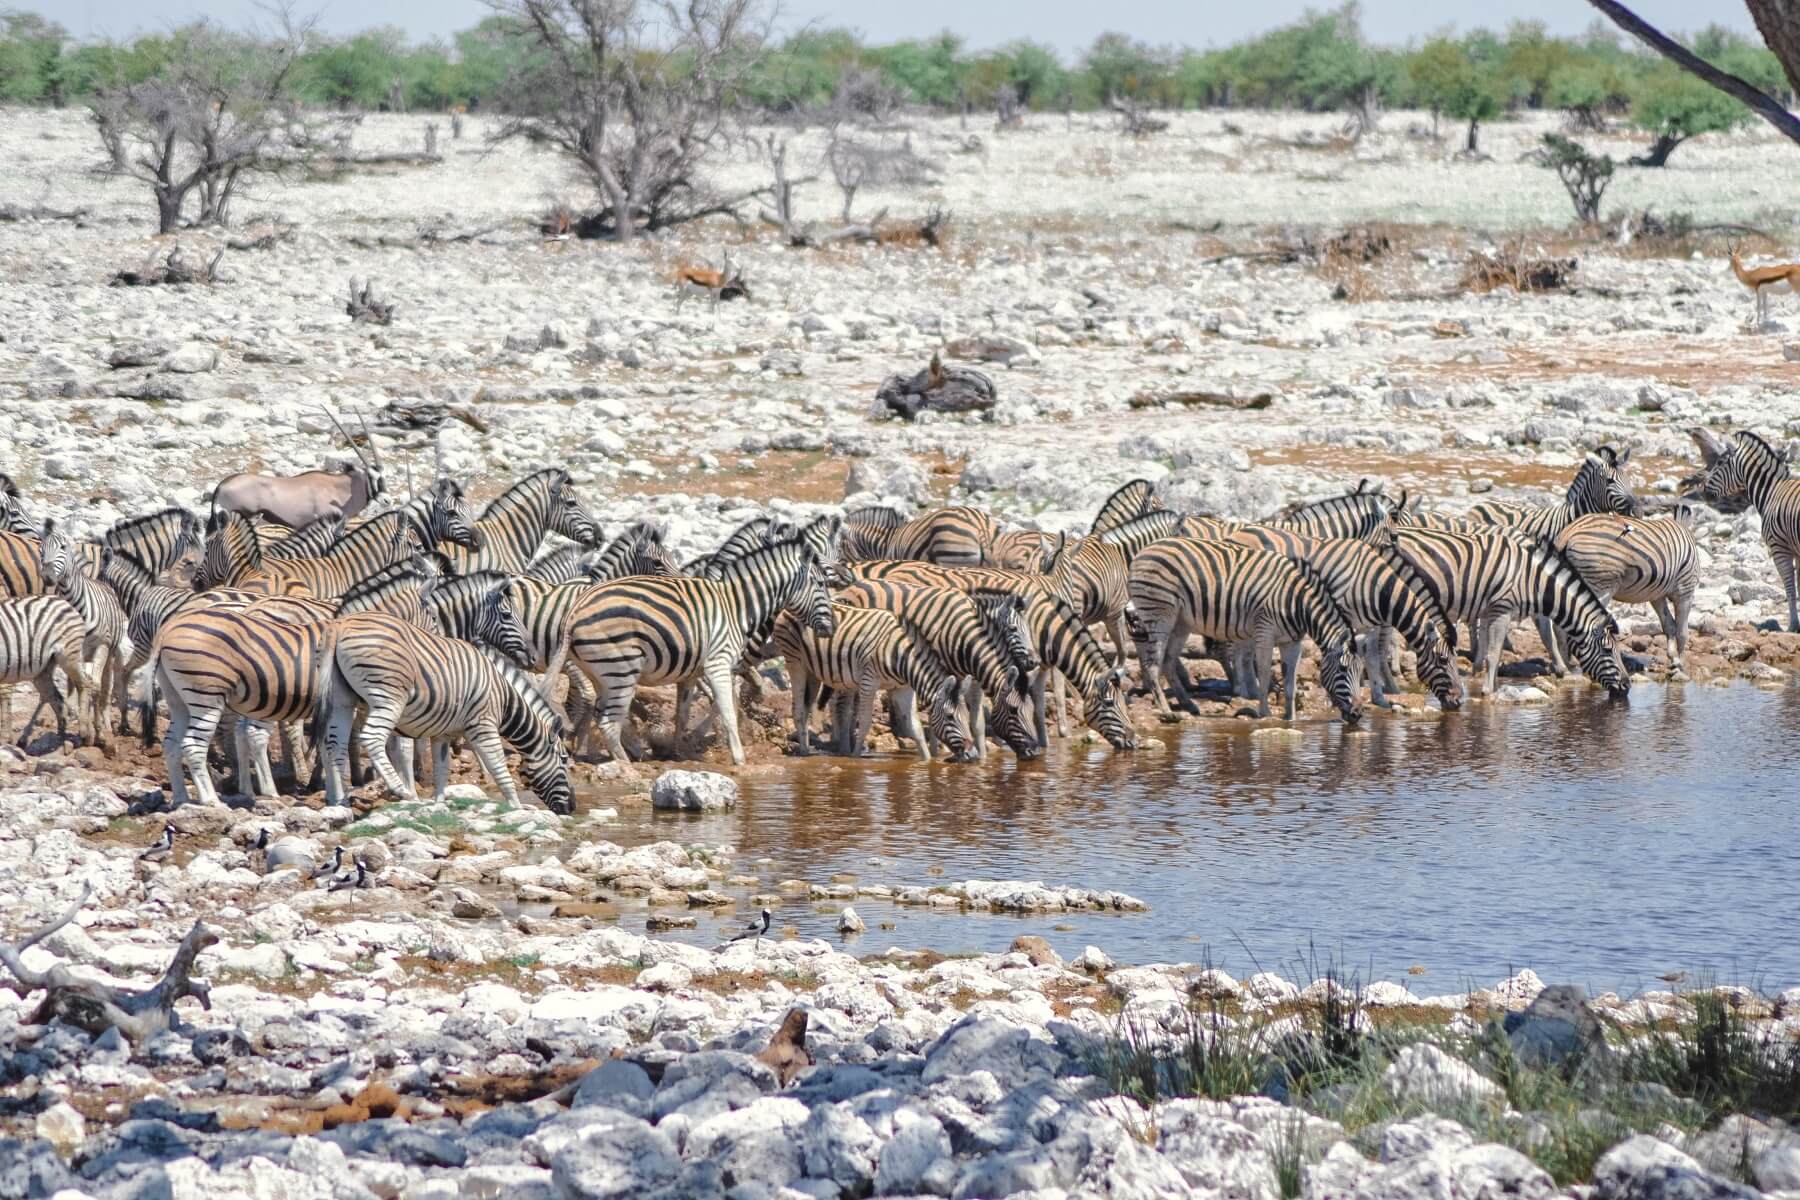 Animals drinking from the water hole in Etosha safari park